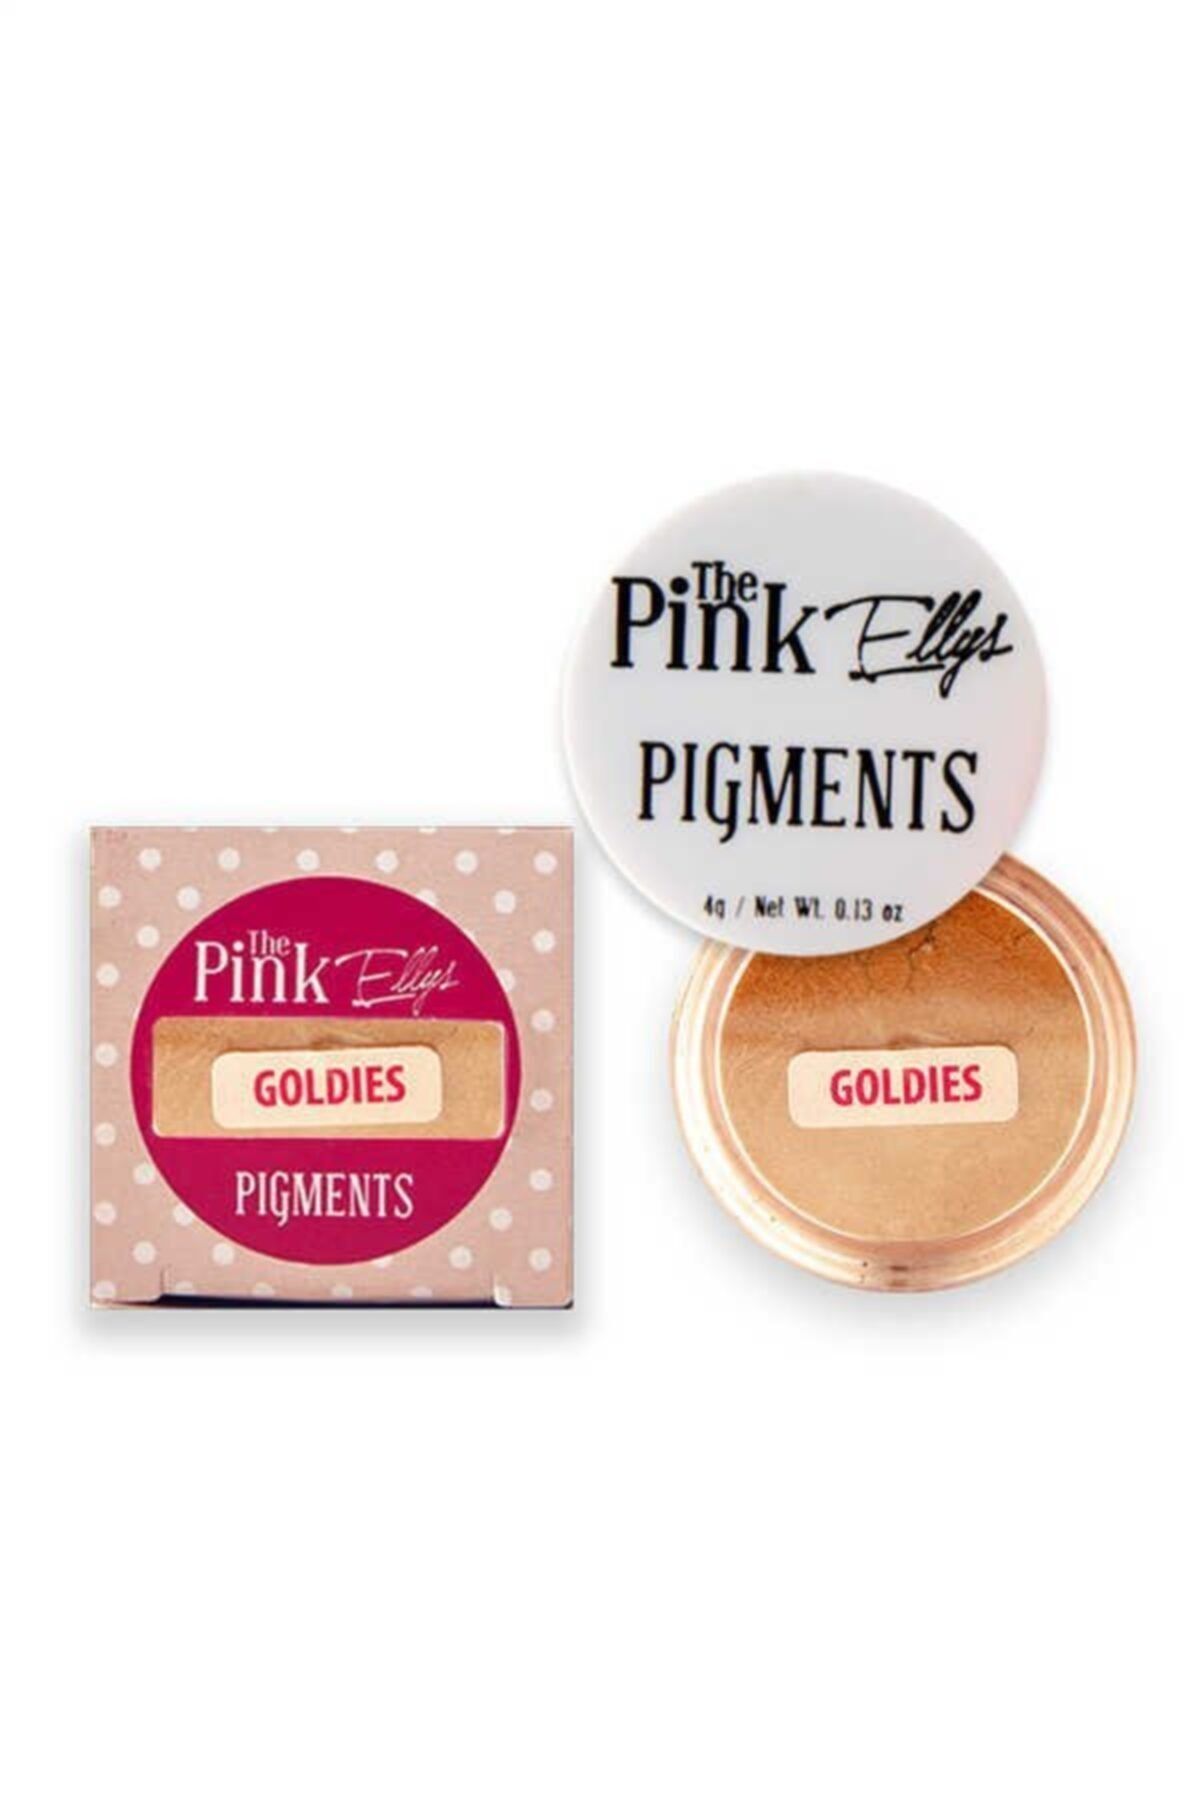 The Pink Ellys Pigments Goldies